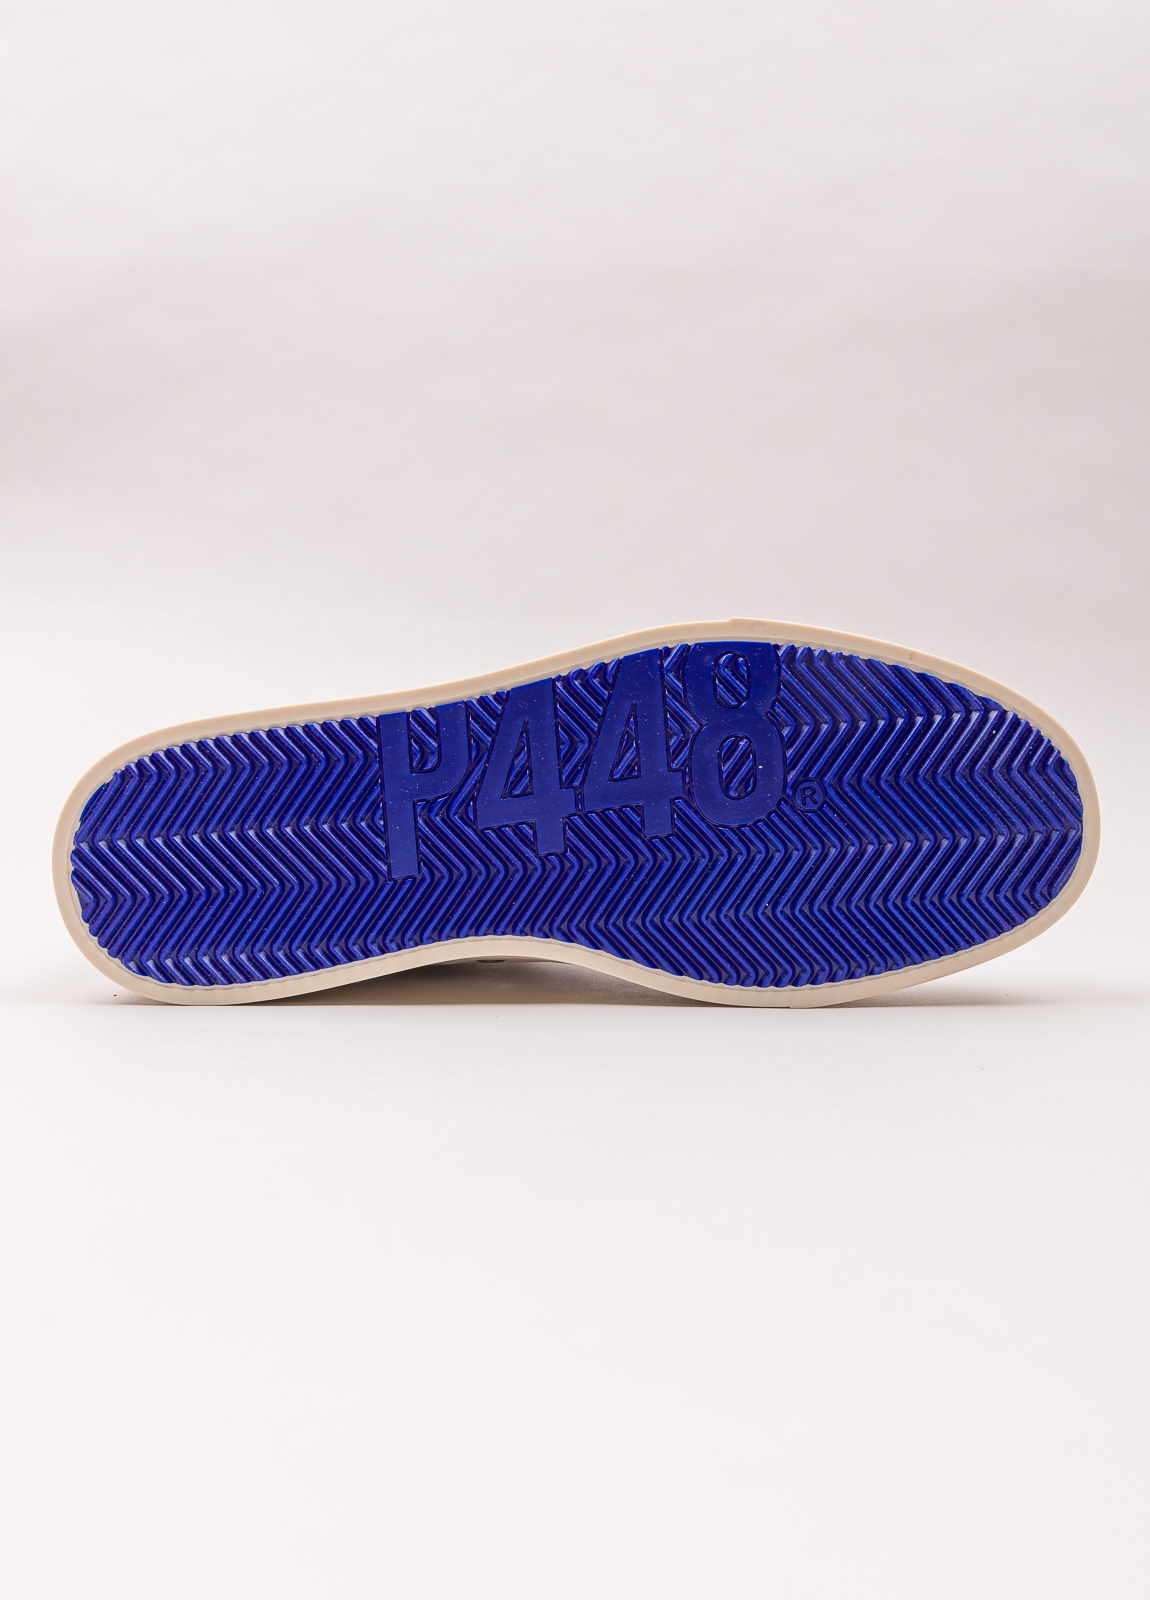 Sneaker P448 blanca y azul - Ítem2